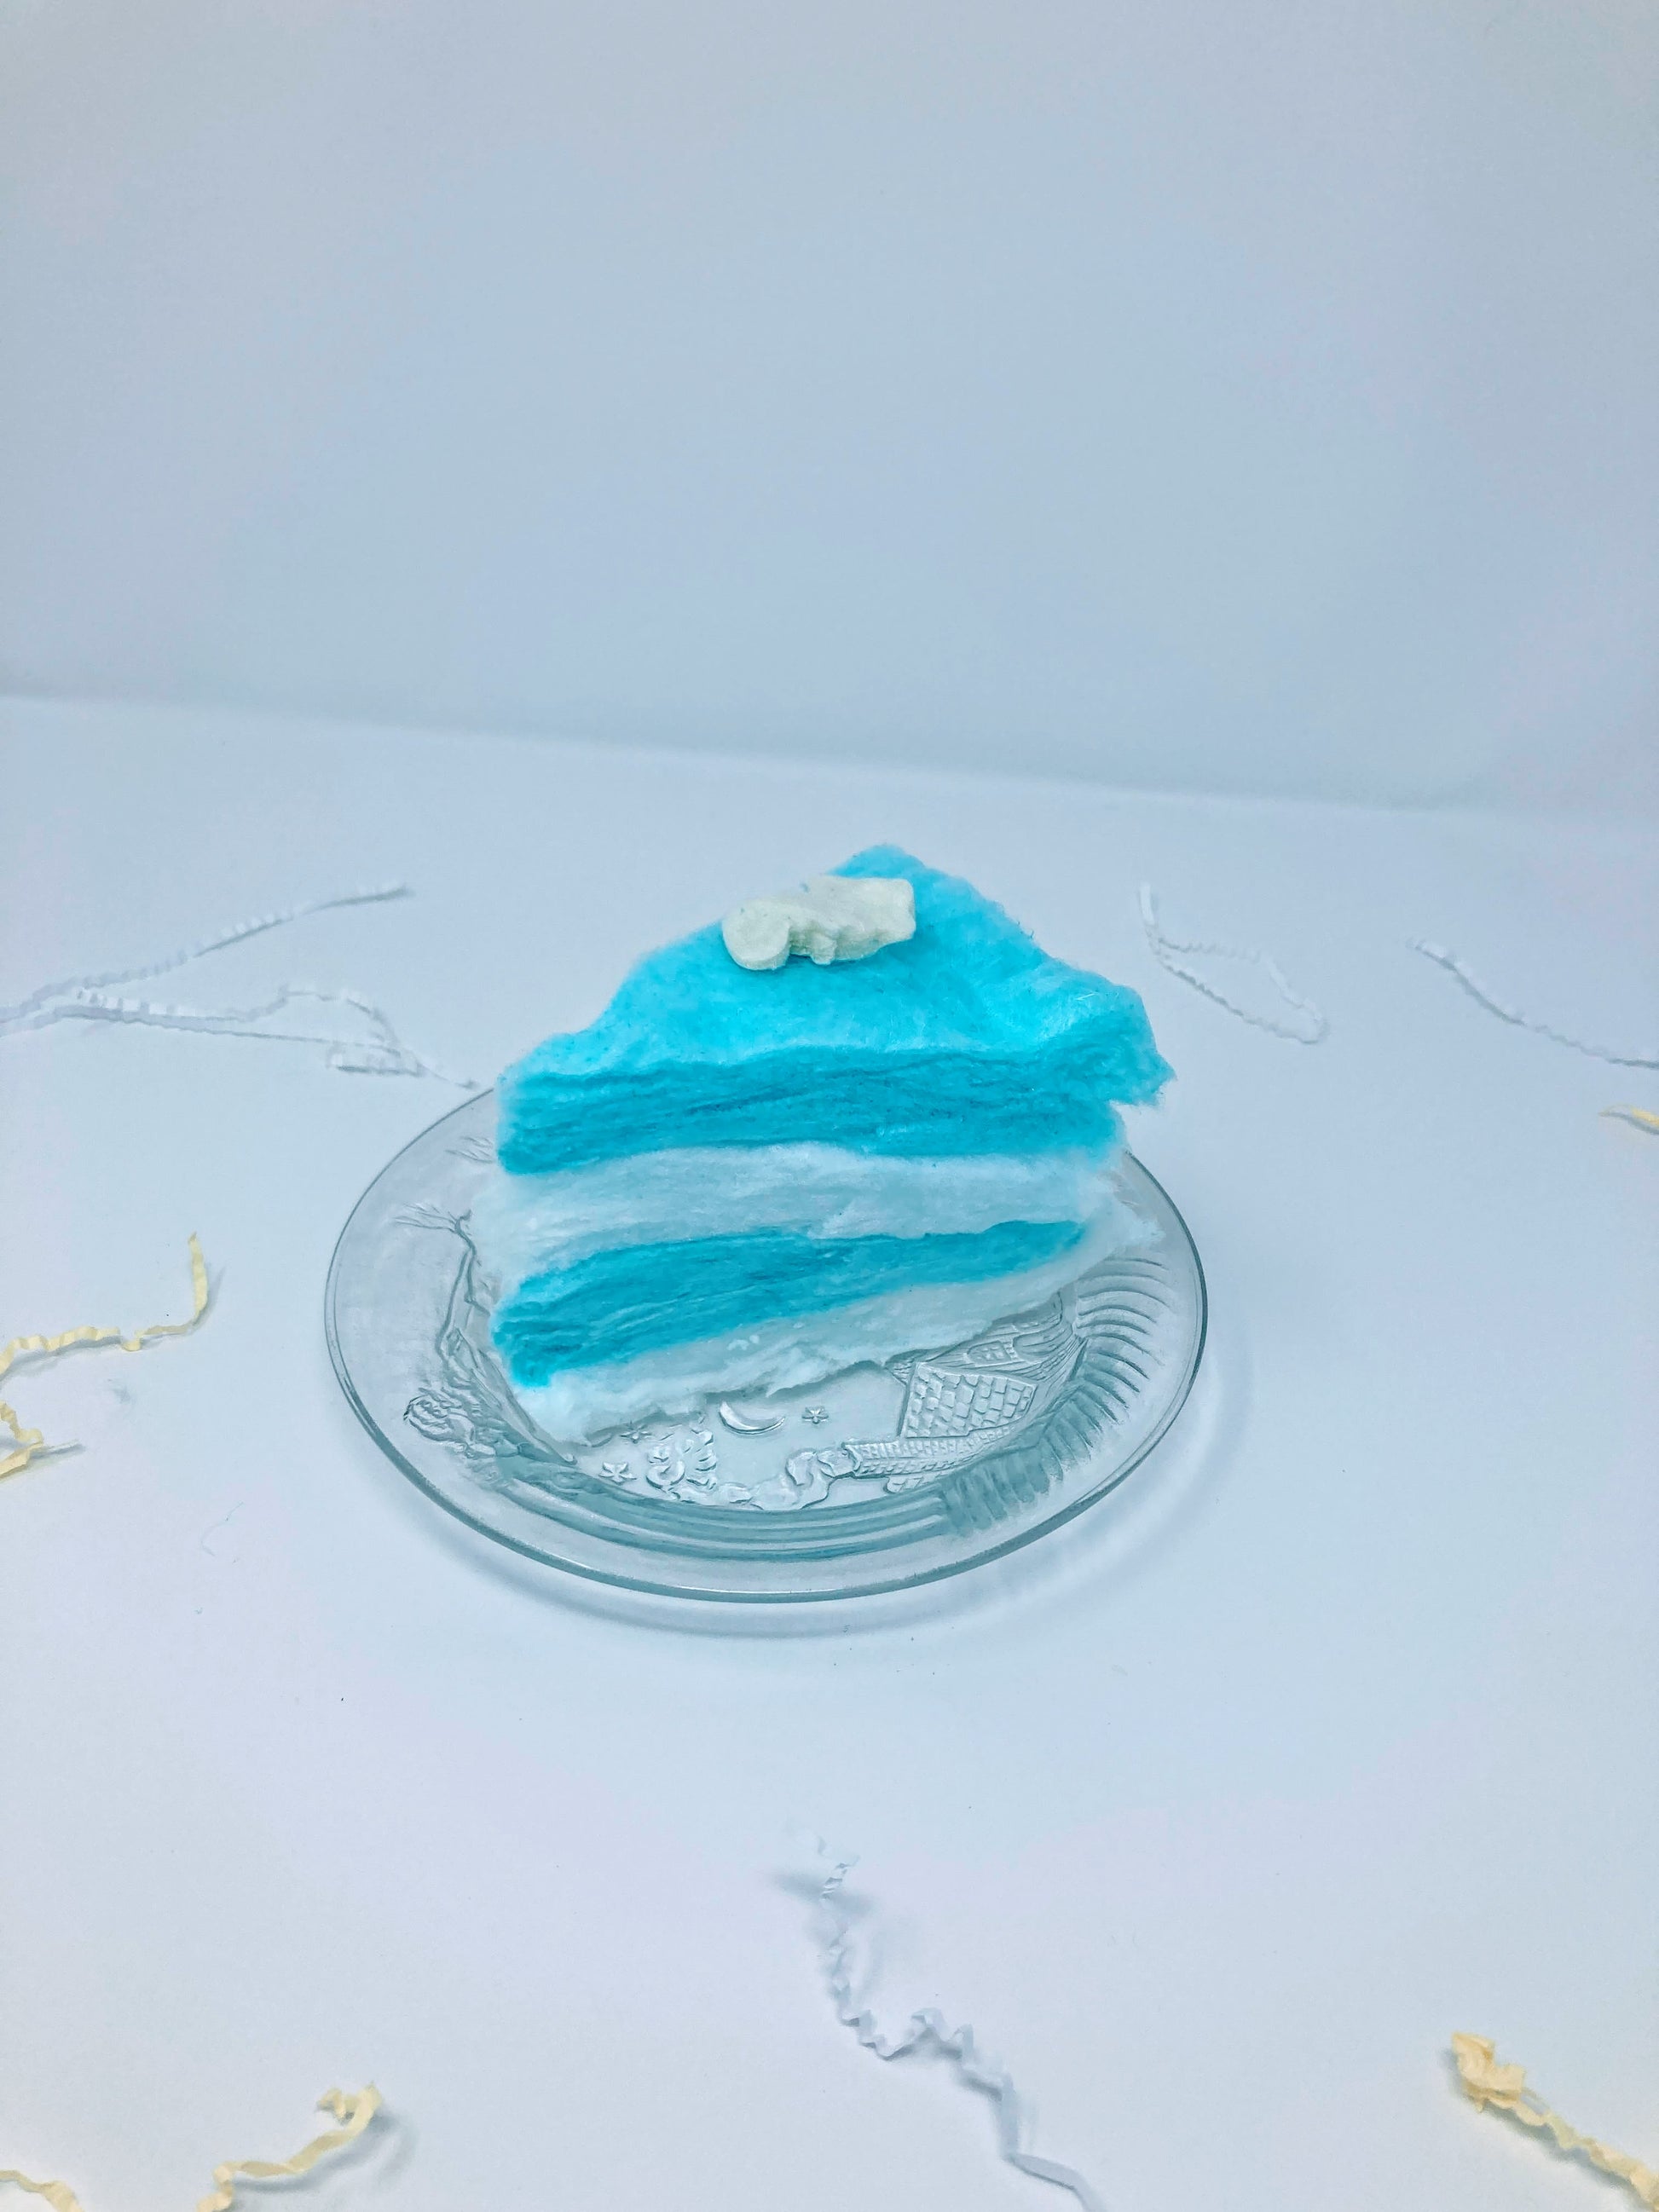 Blue Skies Cotton Candy Cake Posh Fairy Floss